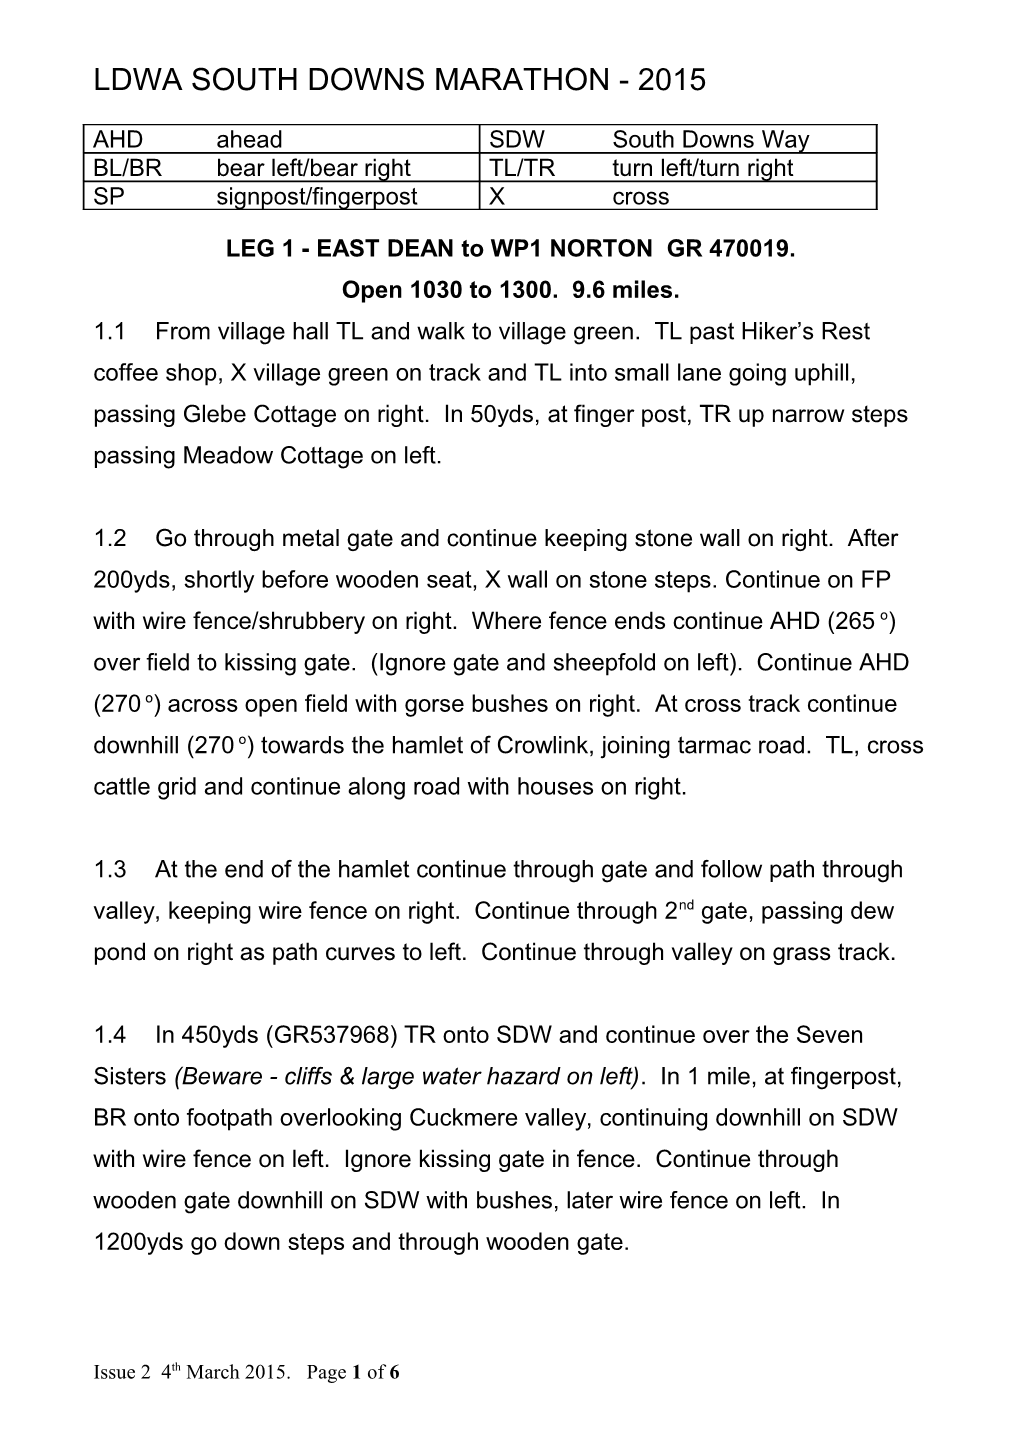 LEG 1 - EAST DEAN to WP1 NORTON GR 470019